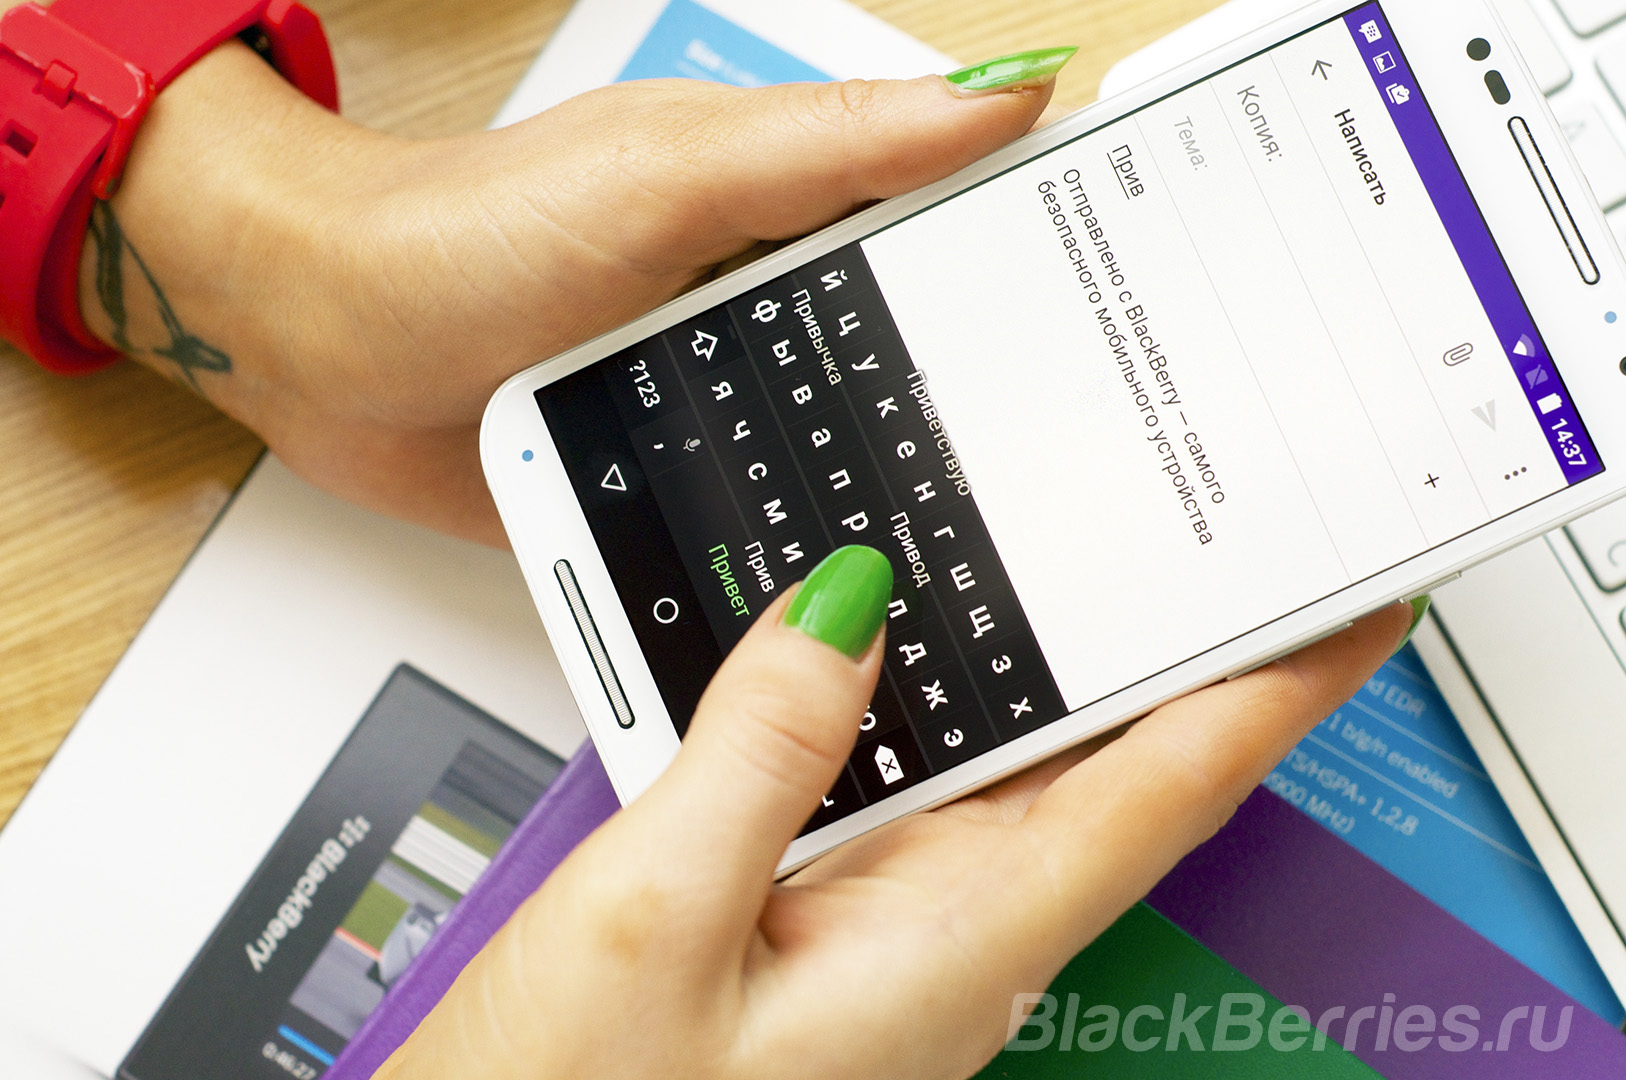 BlackBerry-Priv-Apps-for-Android-12